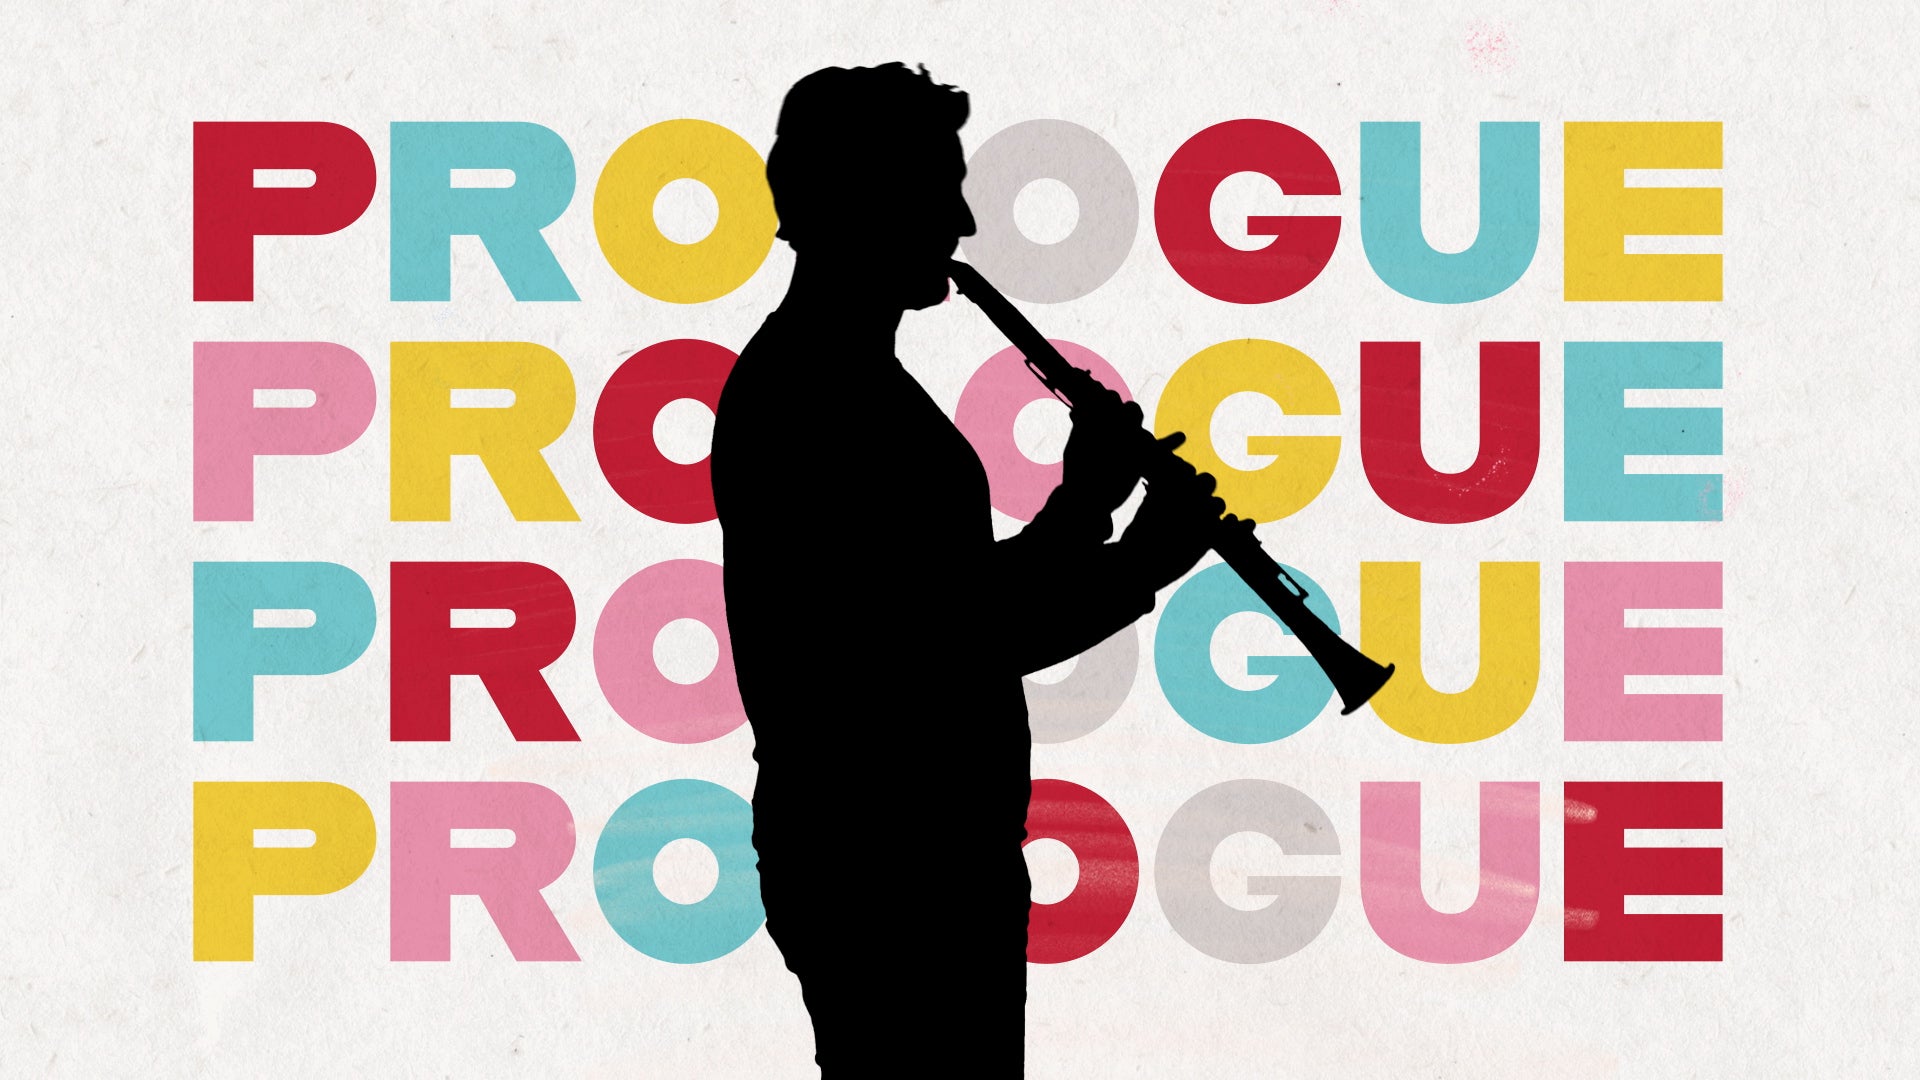 Load video: Prologue clarinet